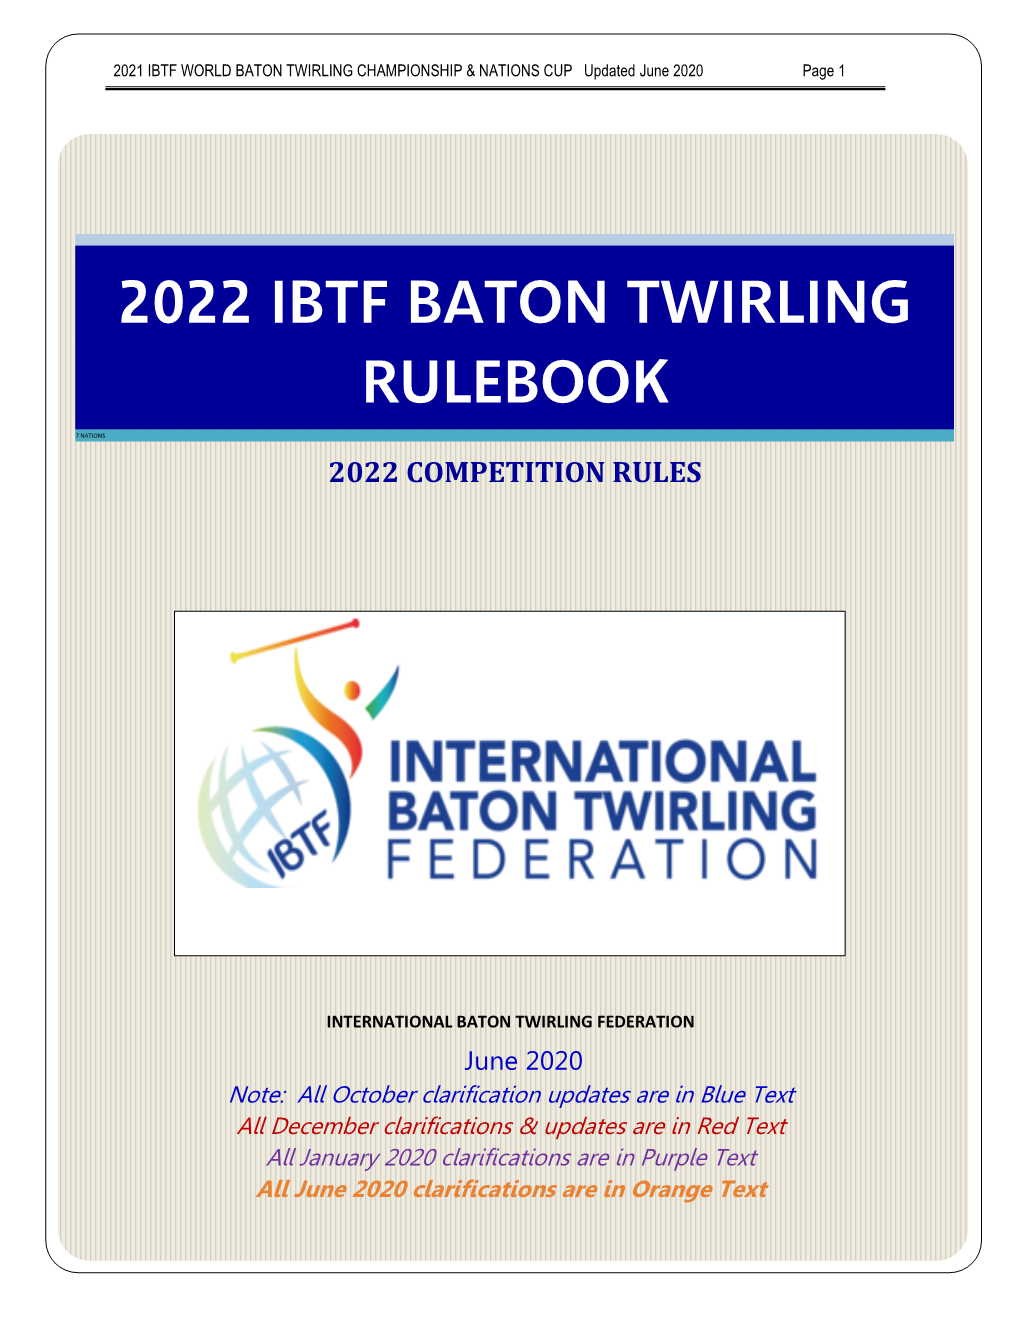 2022 Ibtf Baton Twirling Rulebook